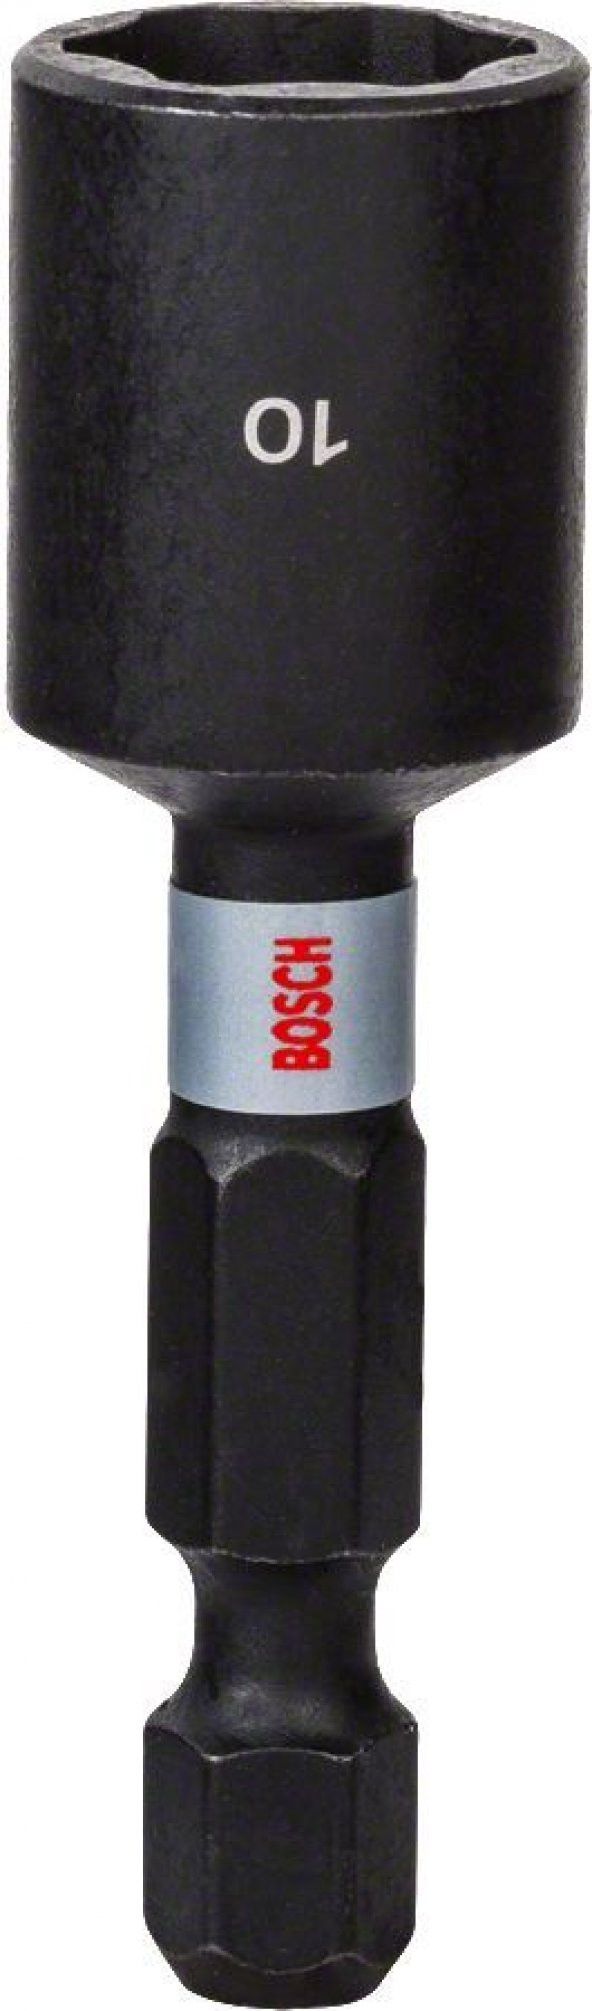 Bosch Impact Ctrl 10mm Nutsetter 50mm